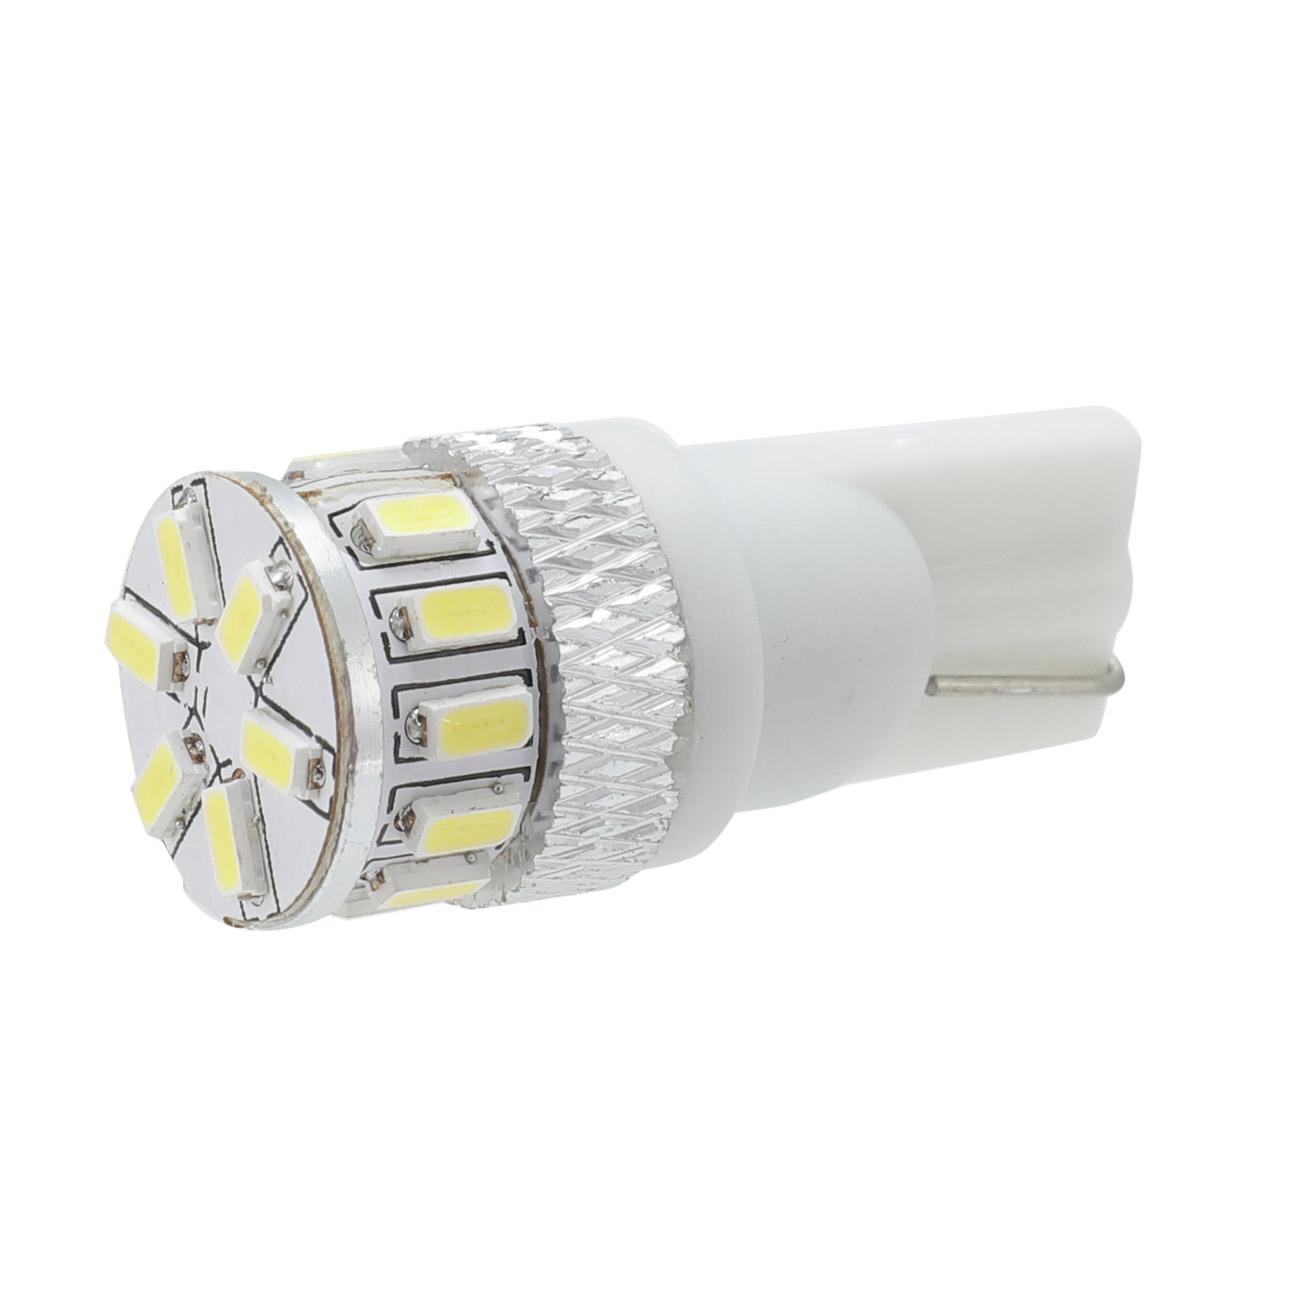 20pcs T10 194 LED Bulbs Super Bright, TSV T10 Wedge 194 168 158 W5W LED  Bulb for License Plate Lights Interior Dome Side Marker Courtesy Lights,  6000K